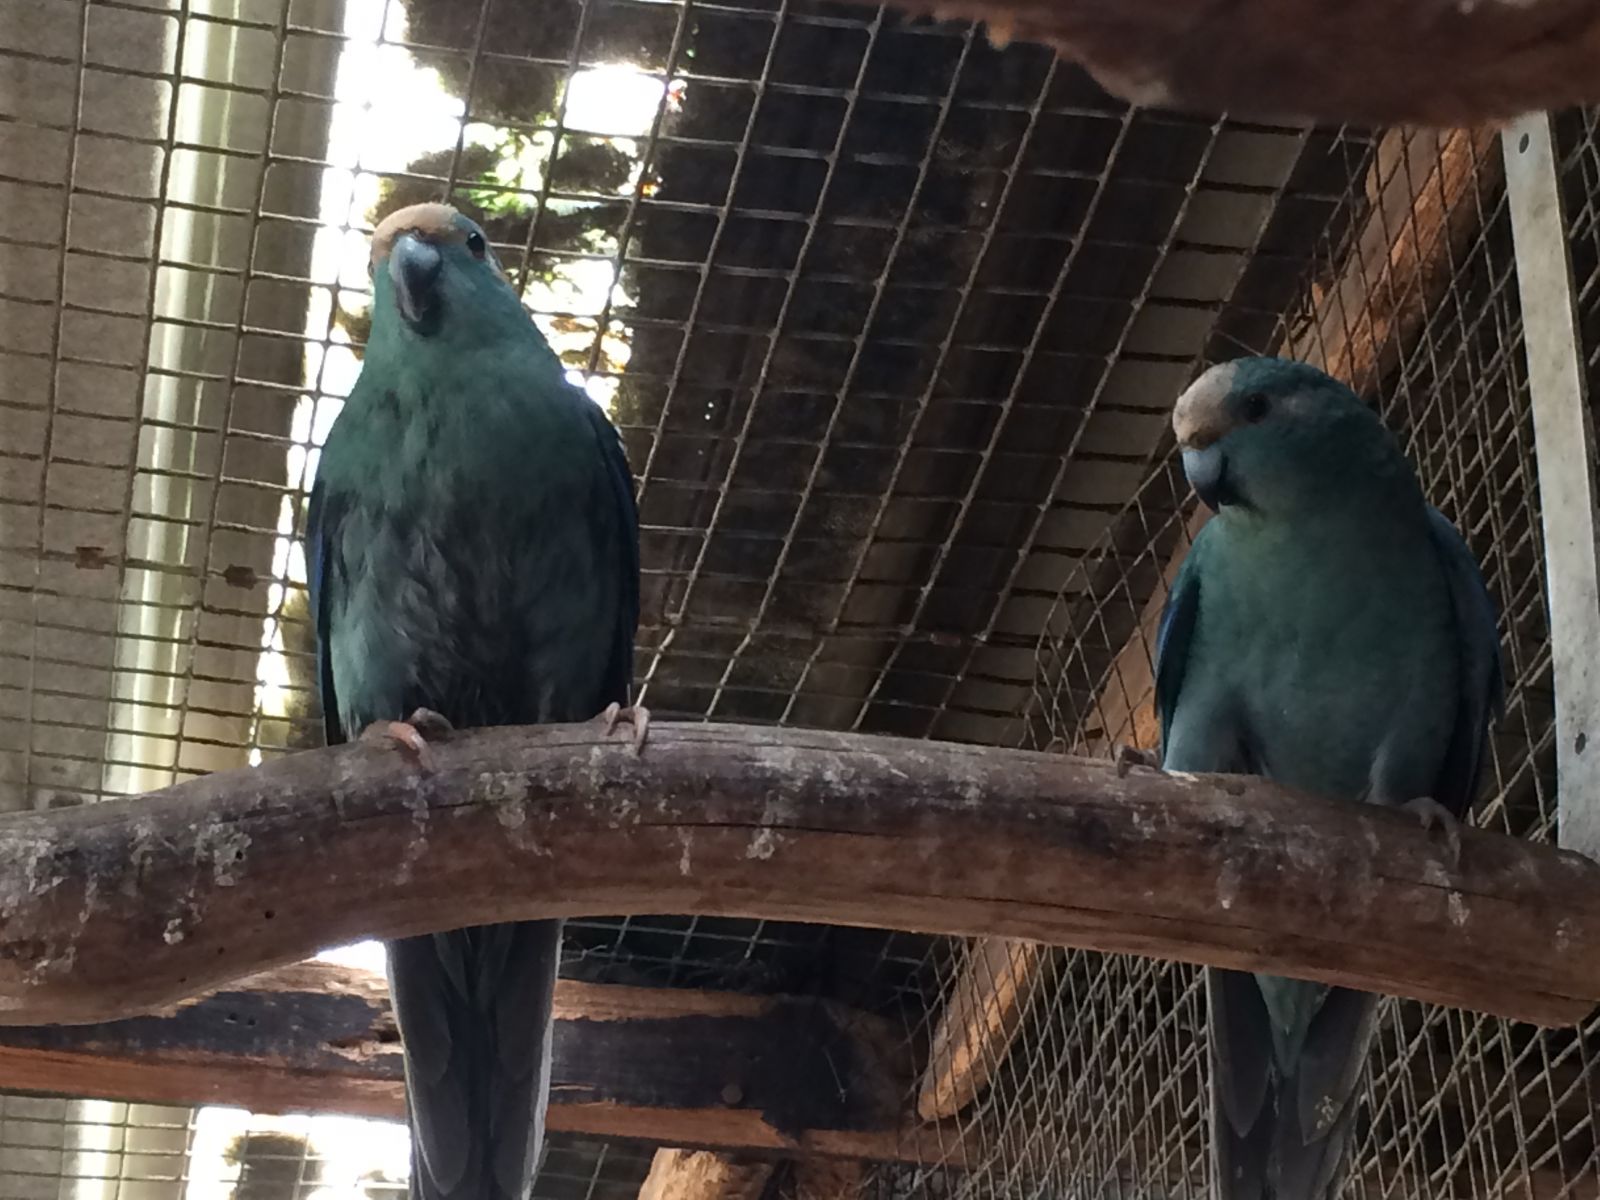 Kakarikis or New Zealand parakeets, pleasant parakeets